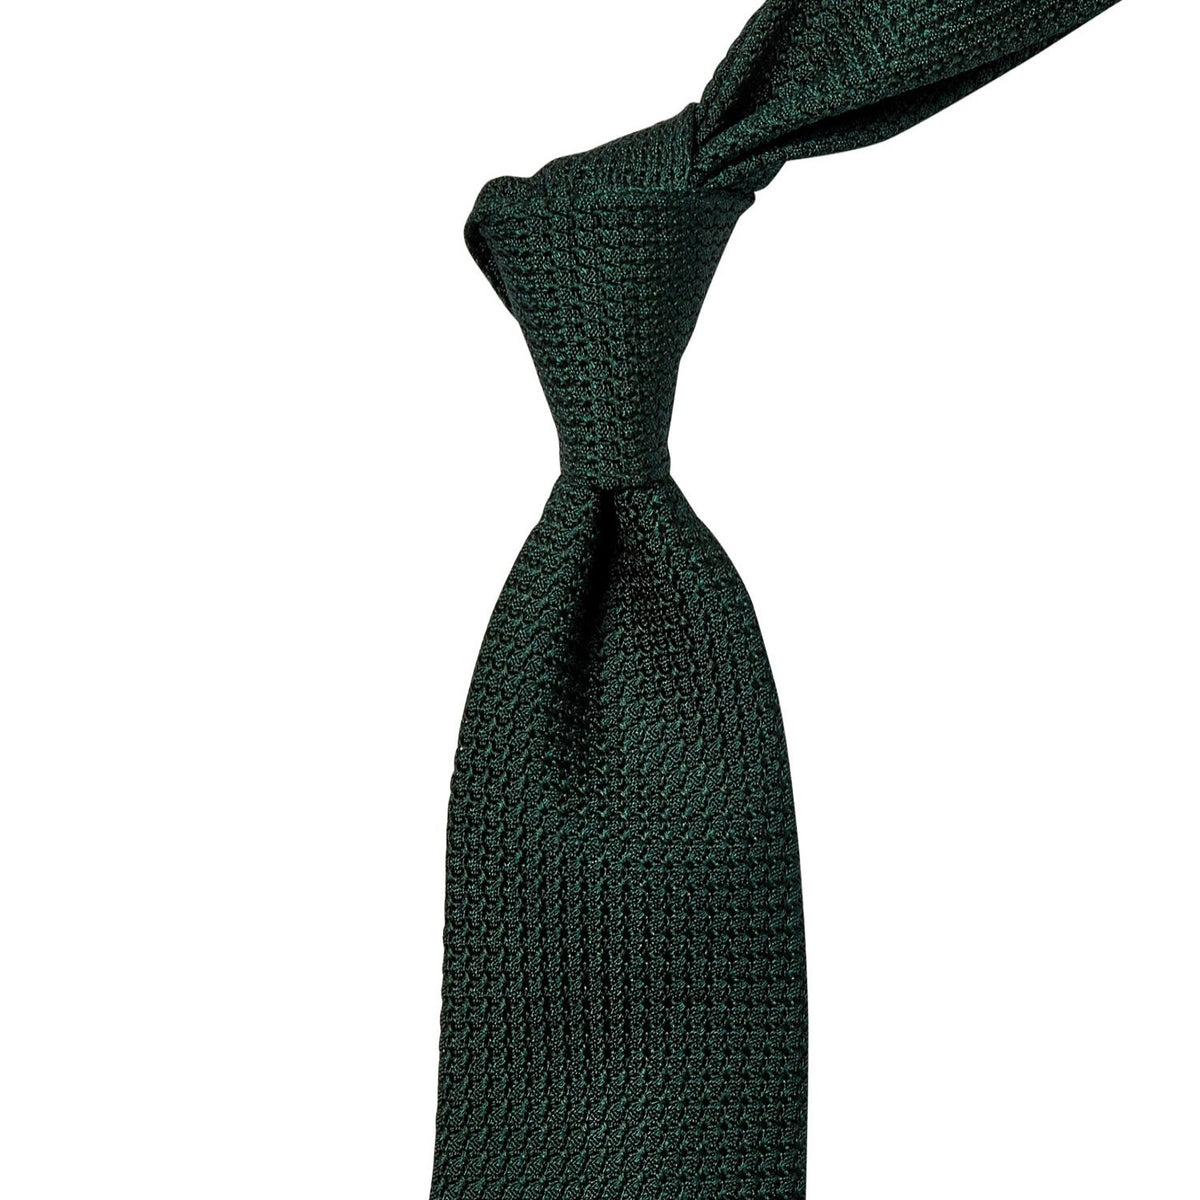 A quality Sovereign Grade Emerald Grenadine Grossa tie from KirbyAllison.com.